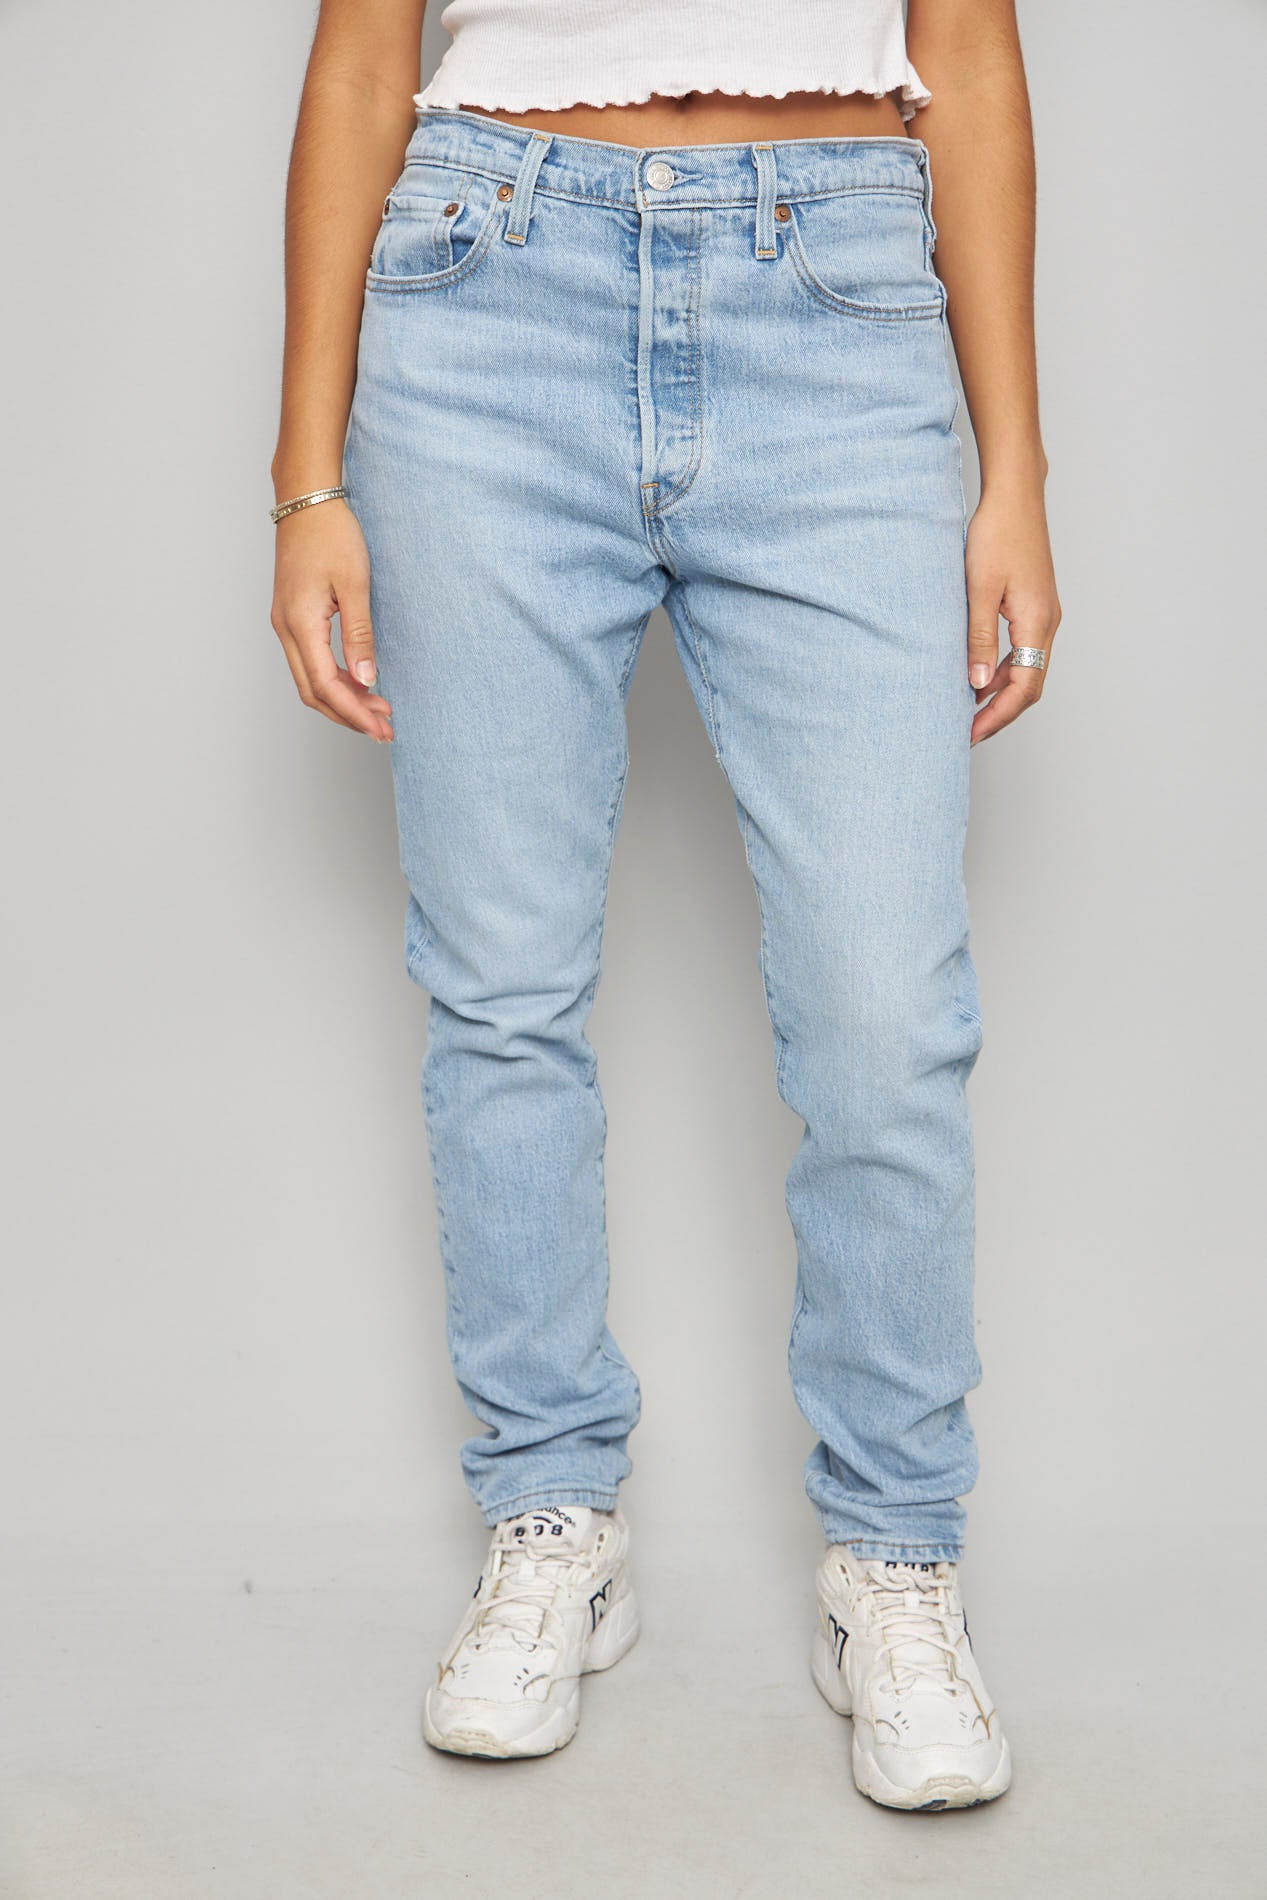 Jeans casual  azul levis talla 38 554